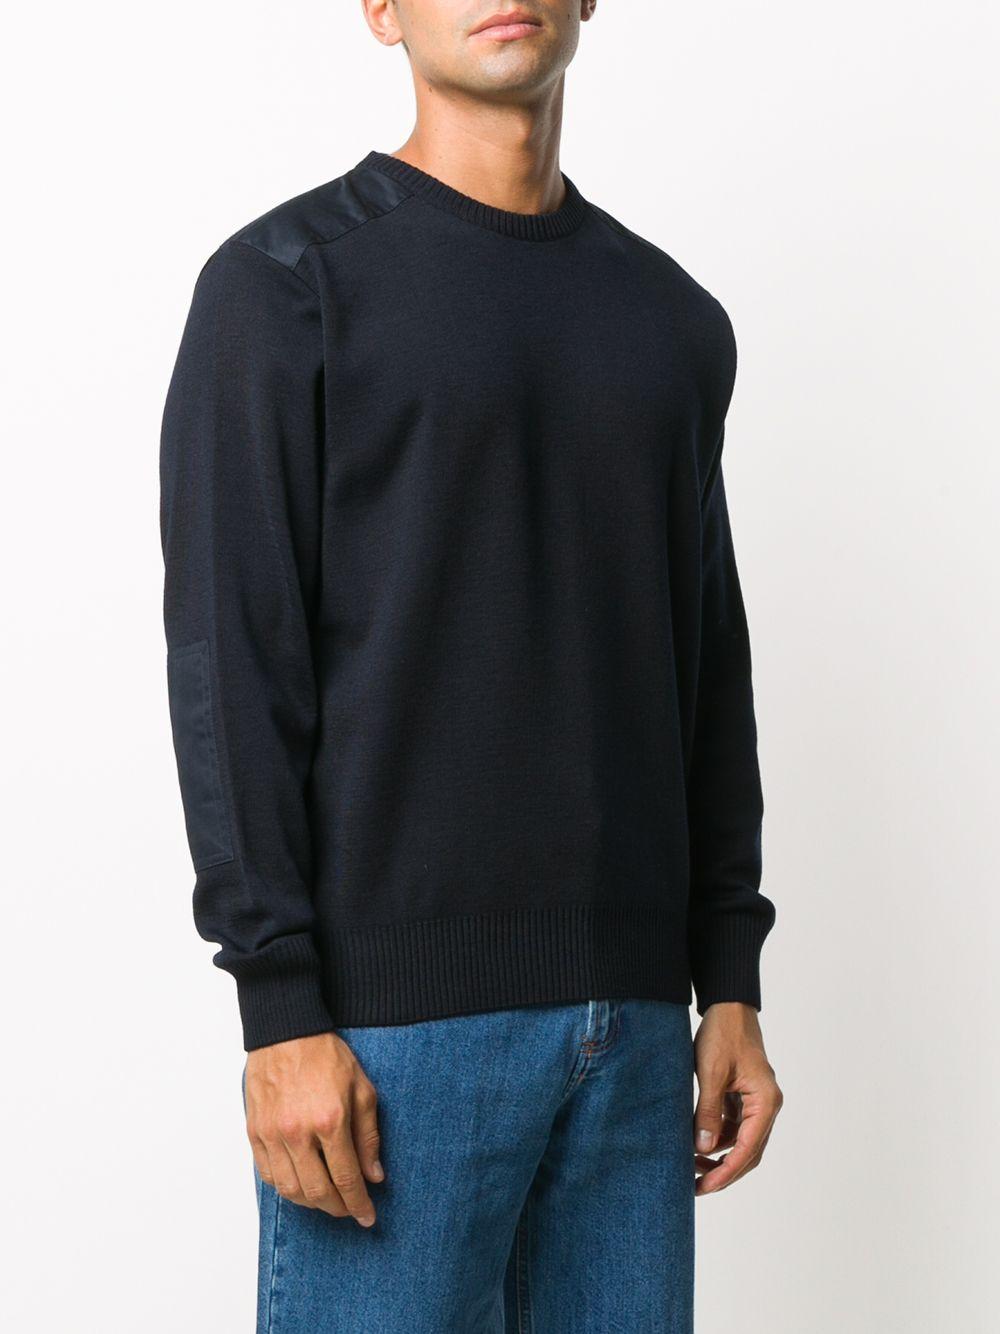 Paul & Shark Wool Crew Neck Logo Patch Sweater in Blue for Men - Lyst